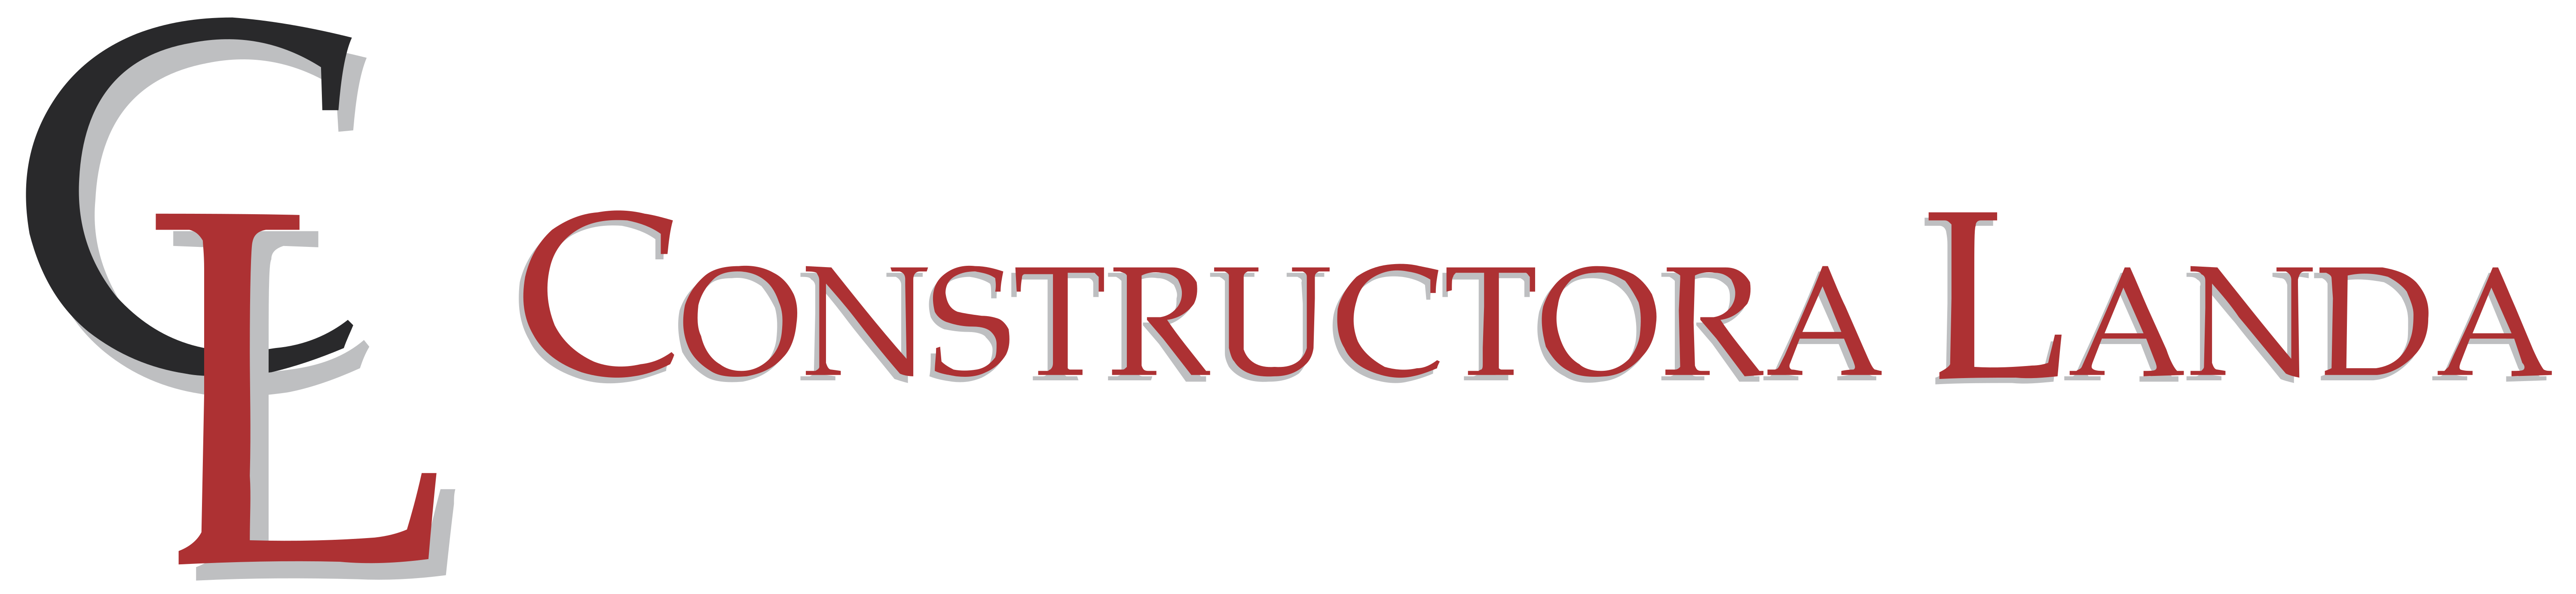 Constructora-Landa-Logo